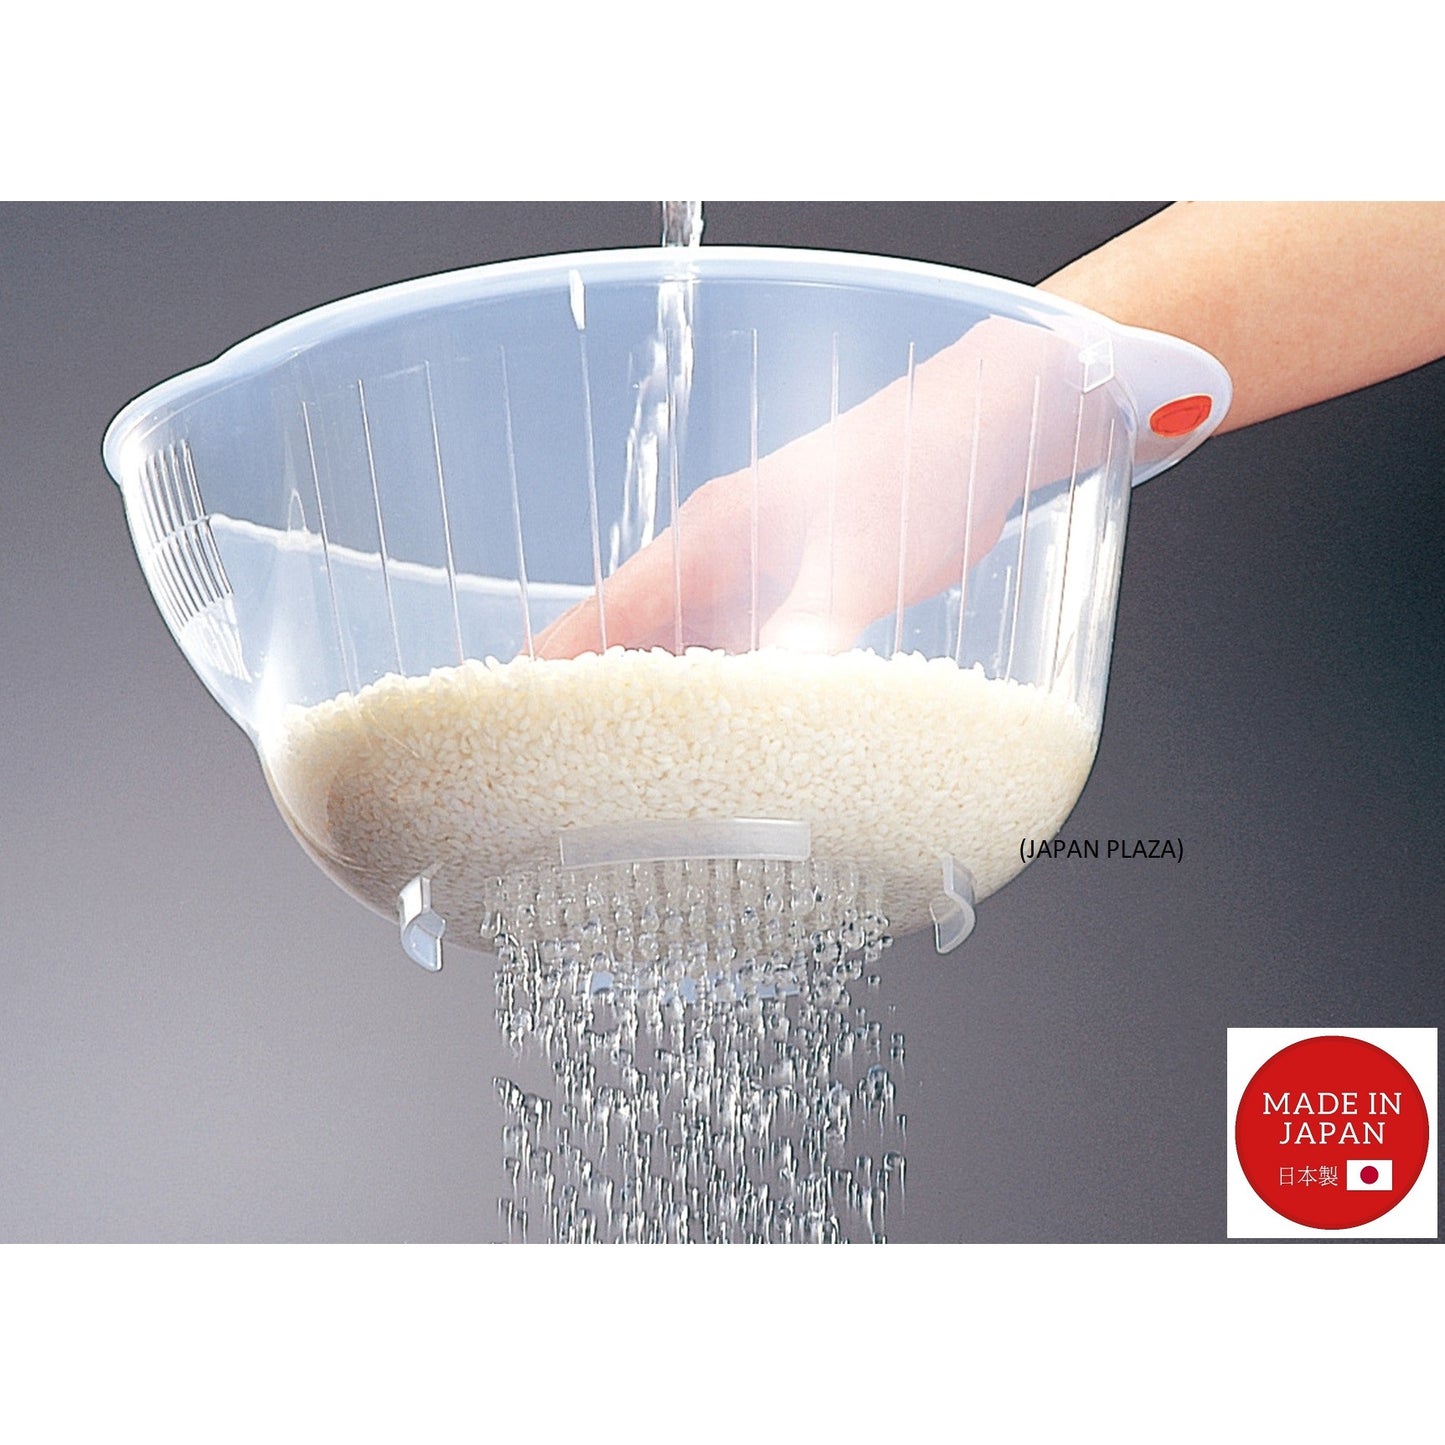 Wash Rice Bowl (Made in Japan)